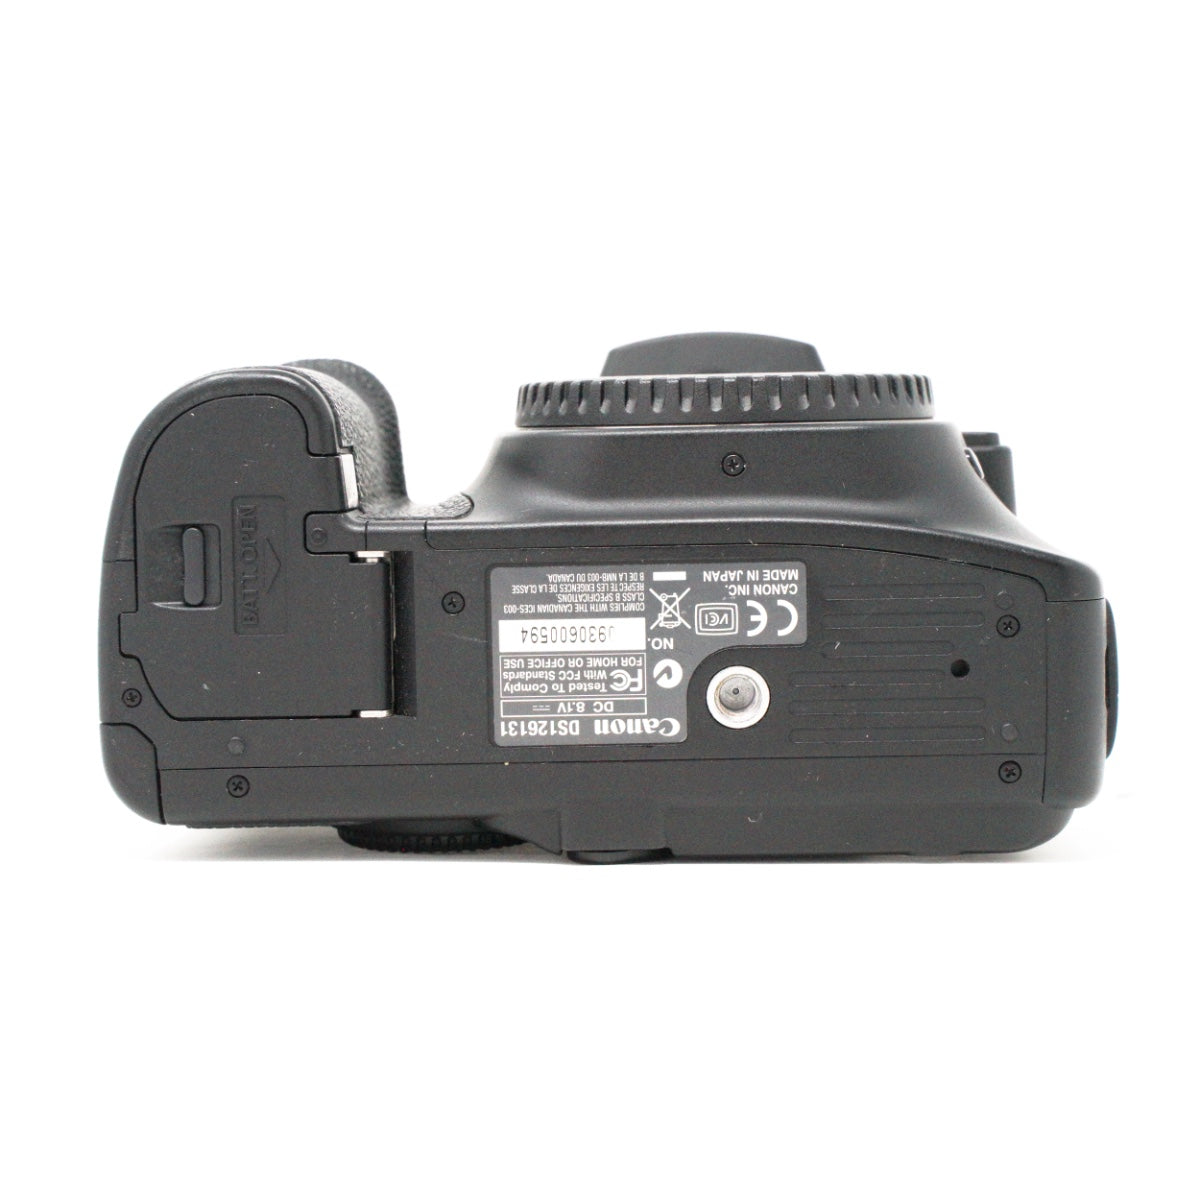 Used Canon EOS 30D Digital SLR camera + 3 batteries